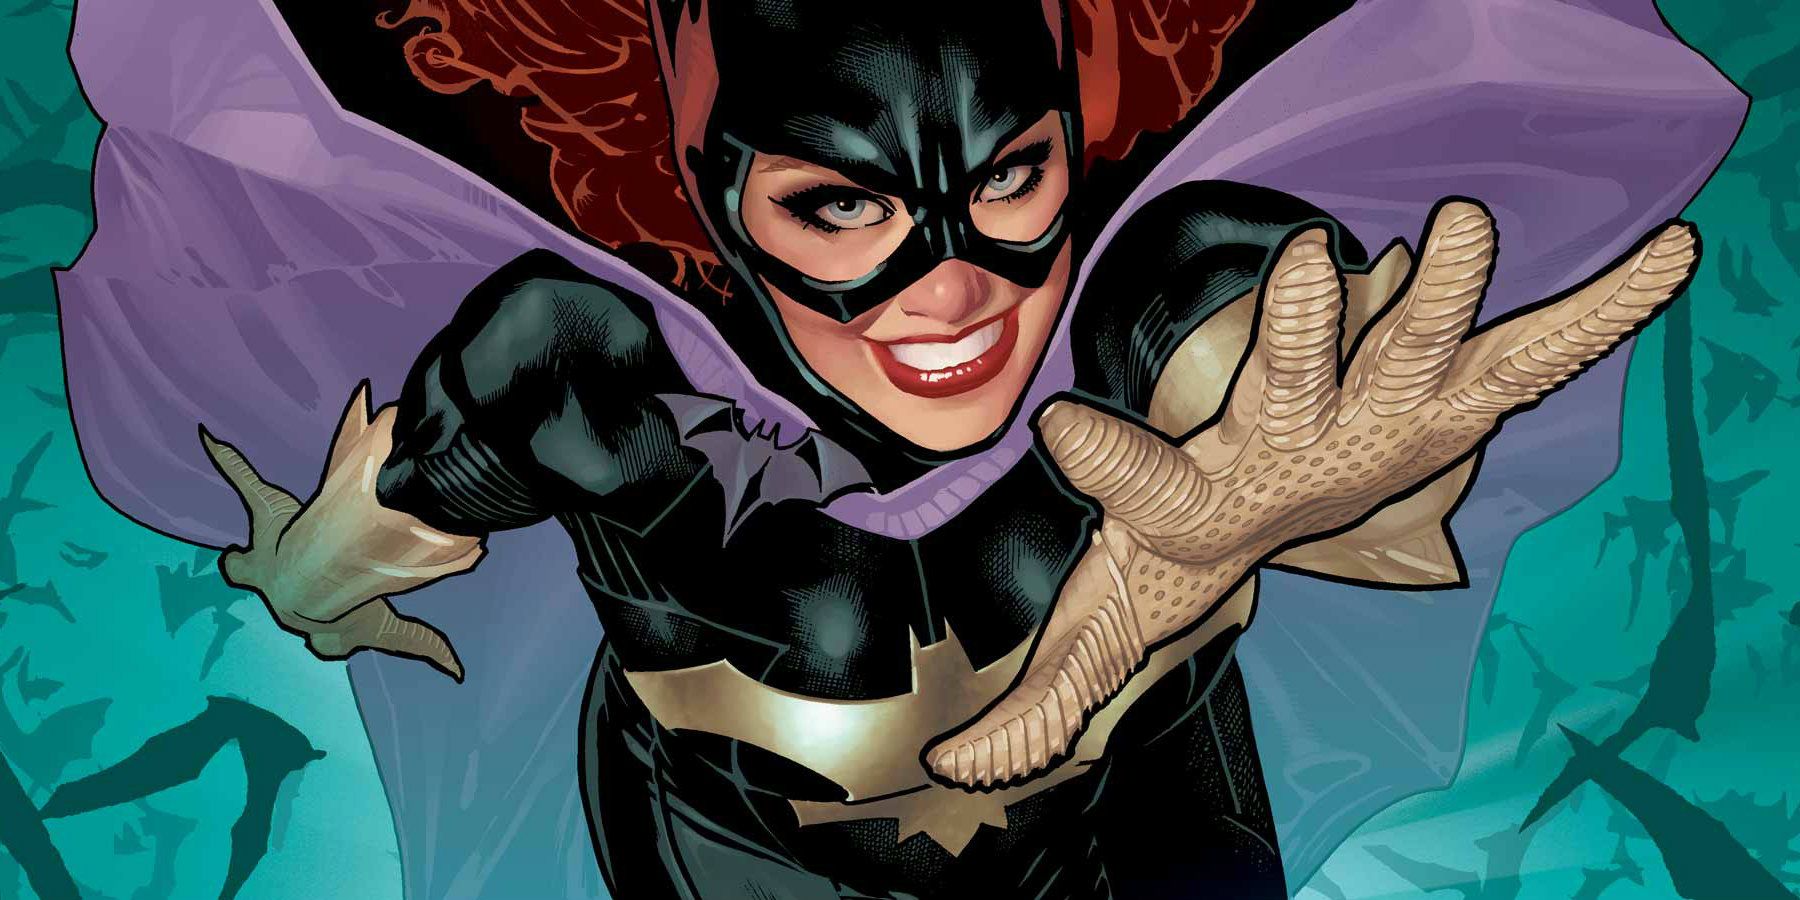 Batgirl smiling while launging forward in DC Comics.